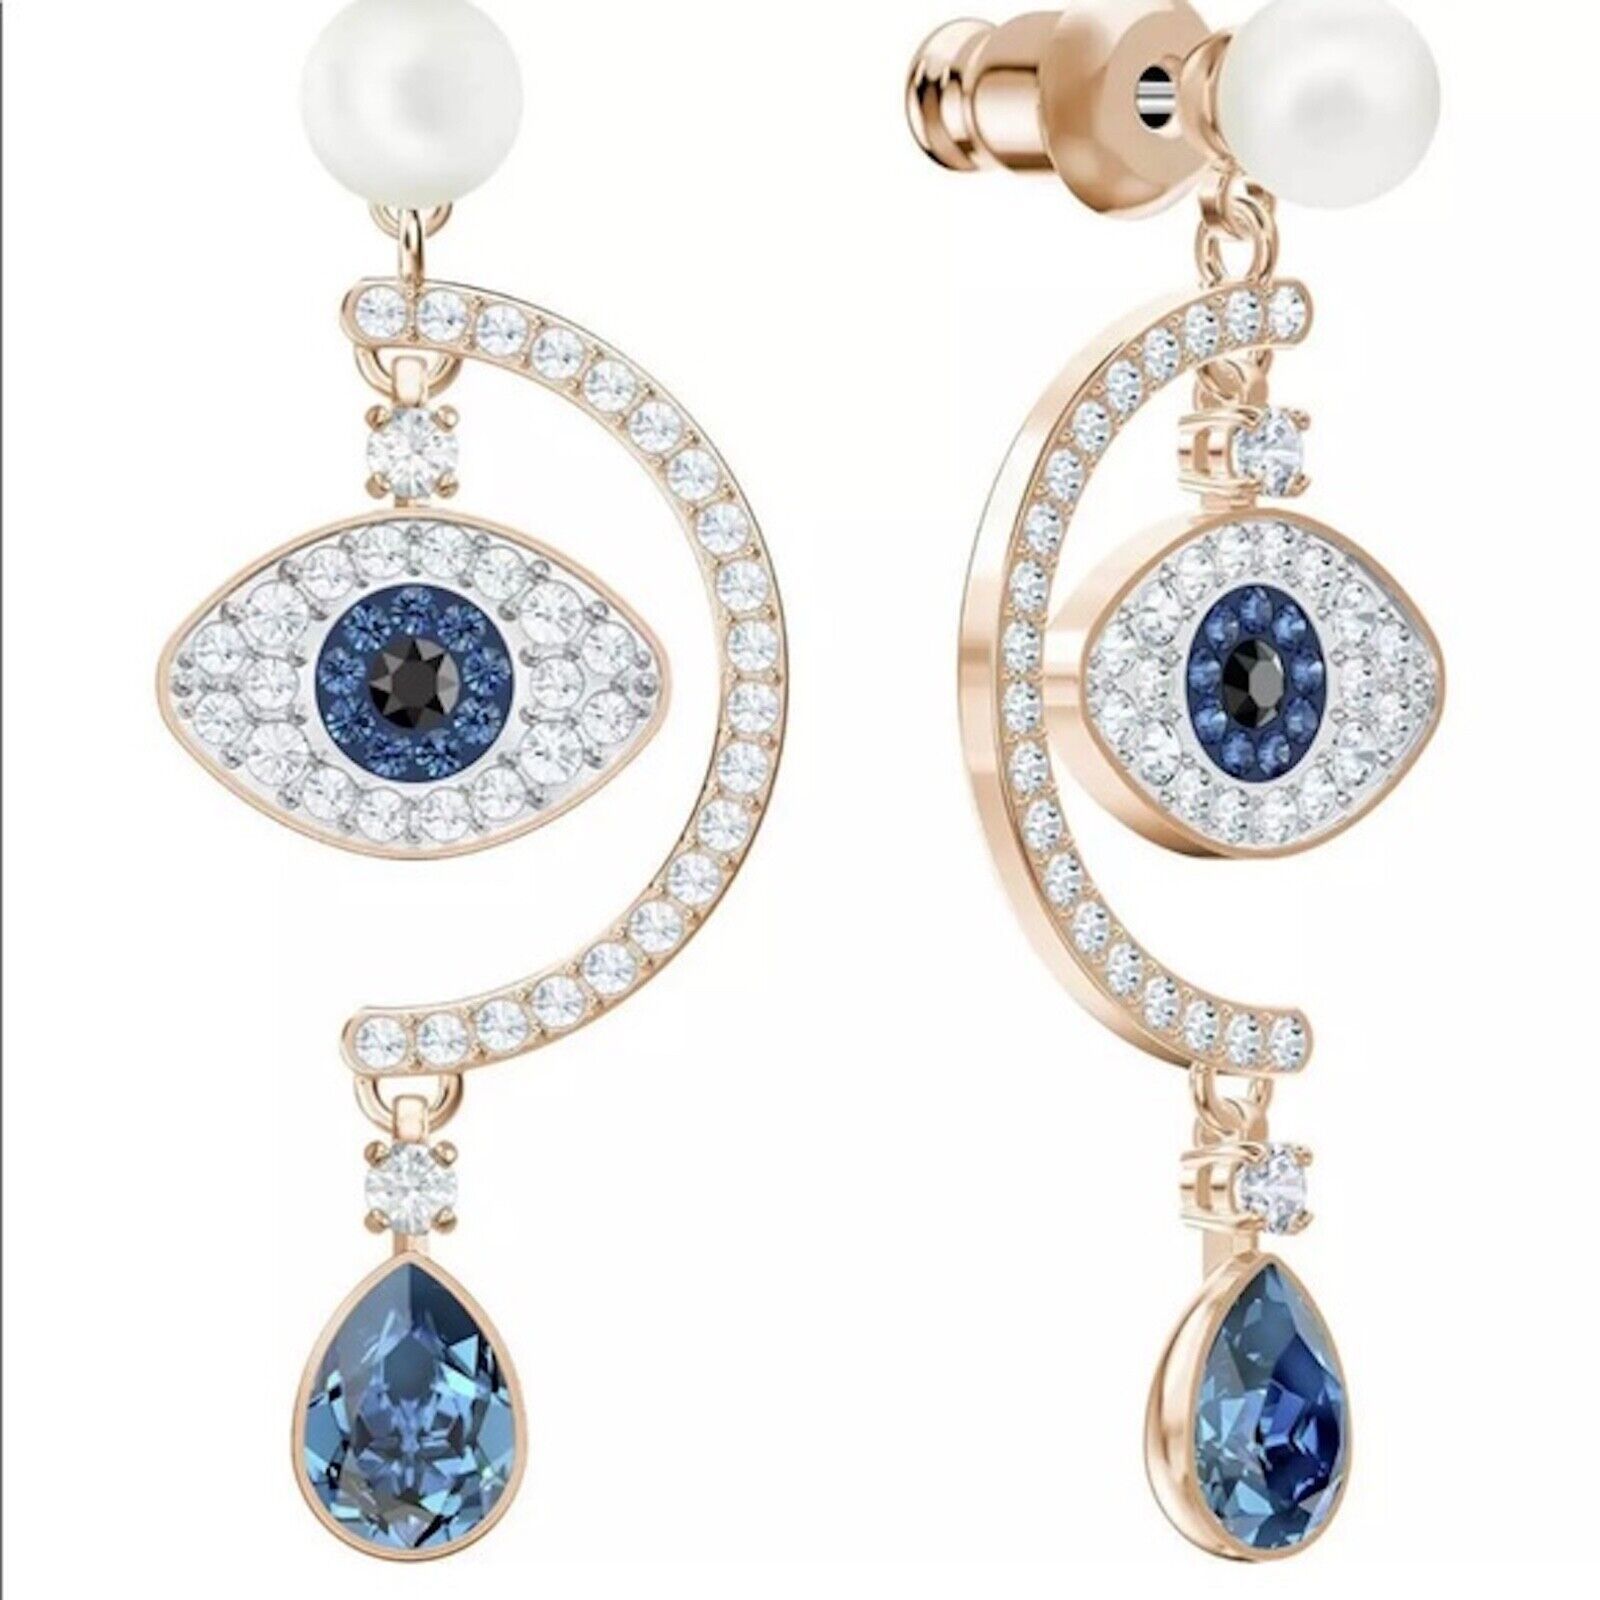 NIB Authentic Swarovski Crystal Akoya FreshWater Pearl Evil Eye Dangle Earrings - $37.19 - $83.97